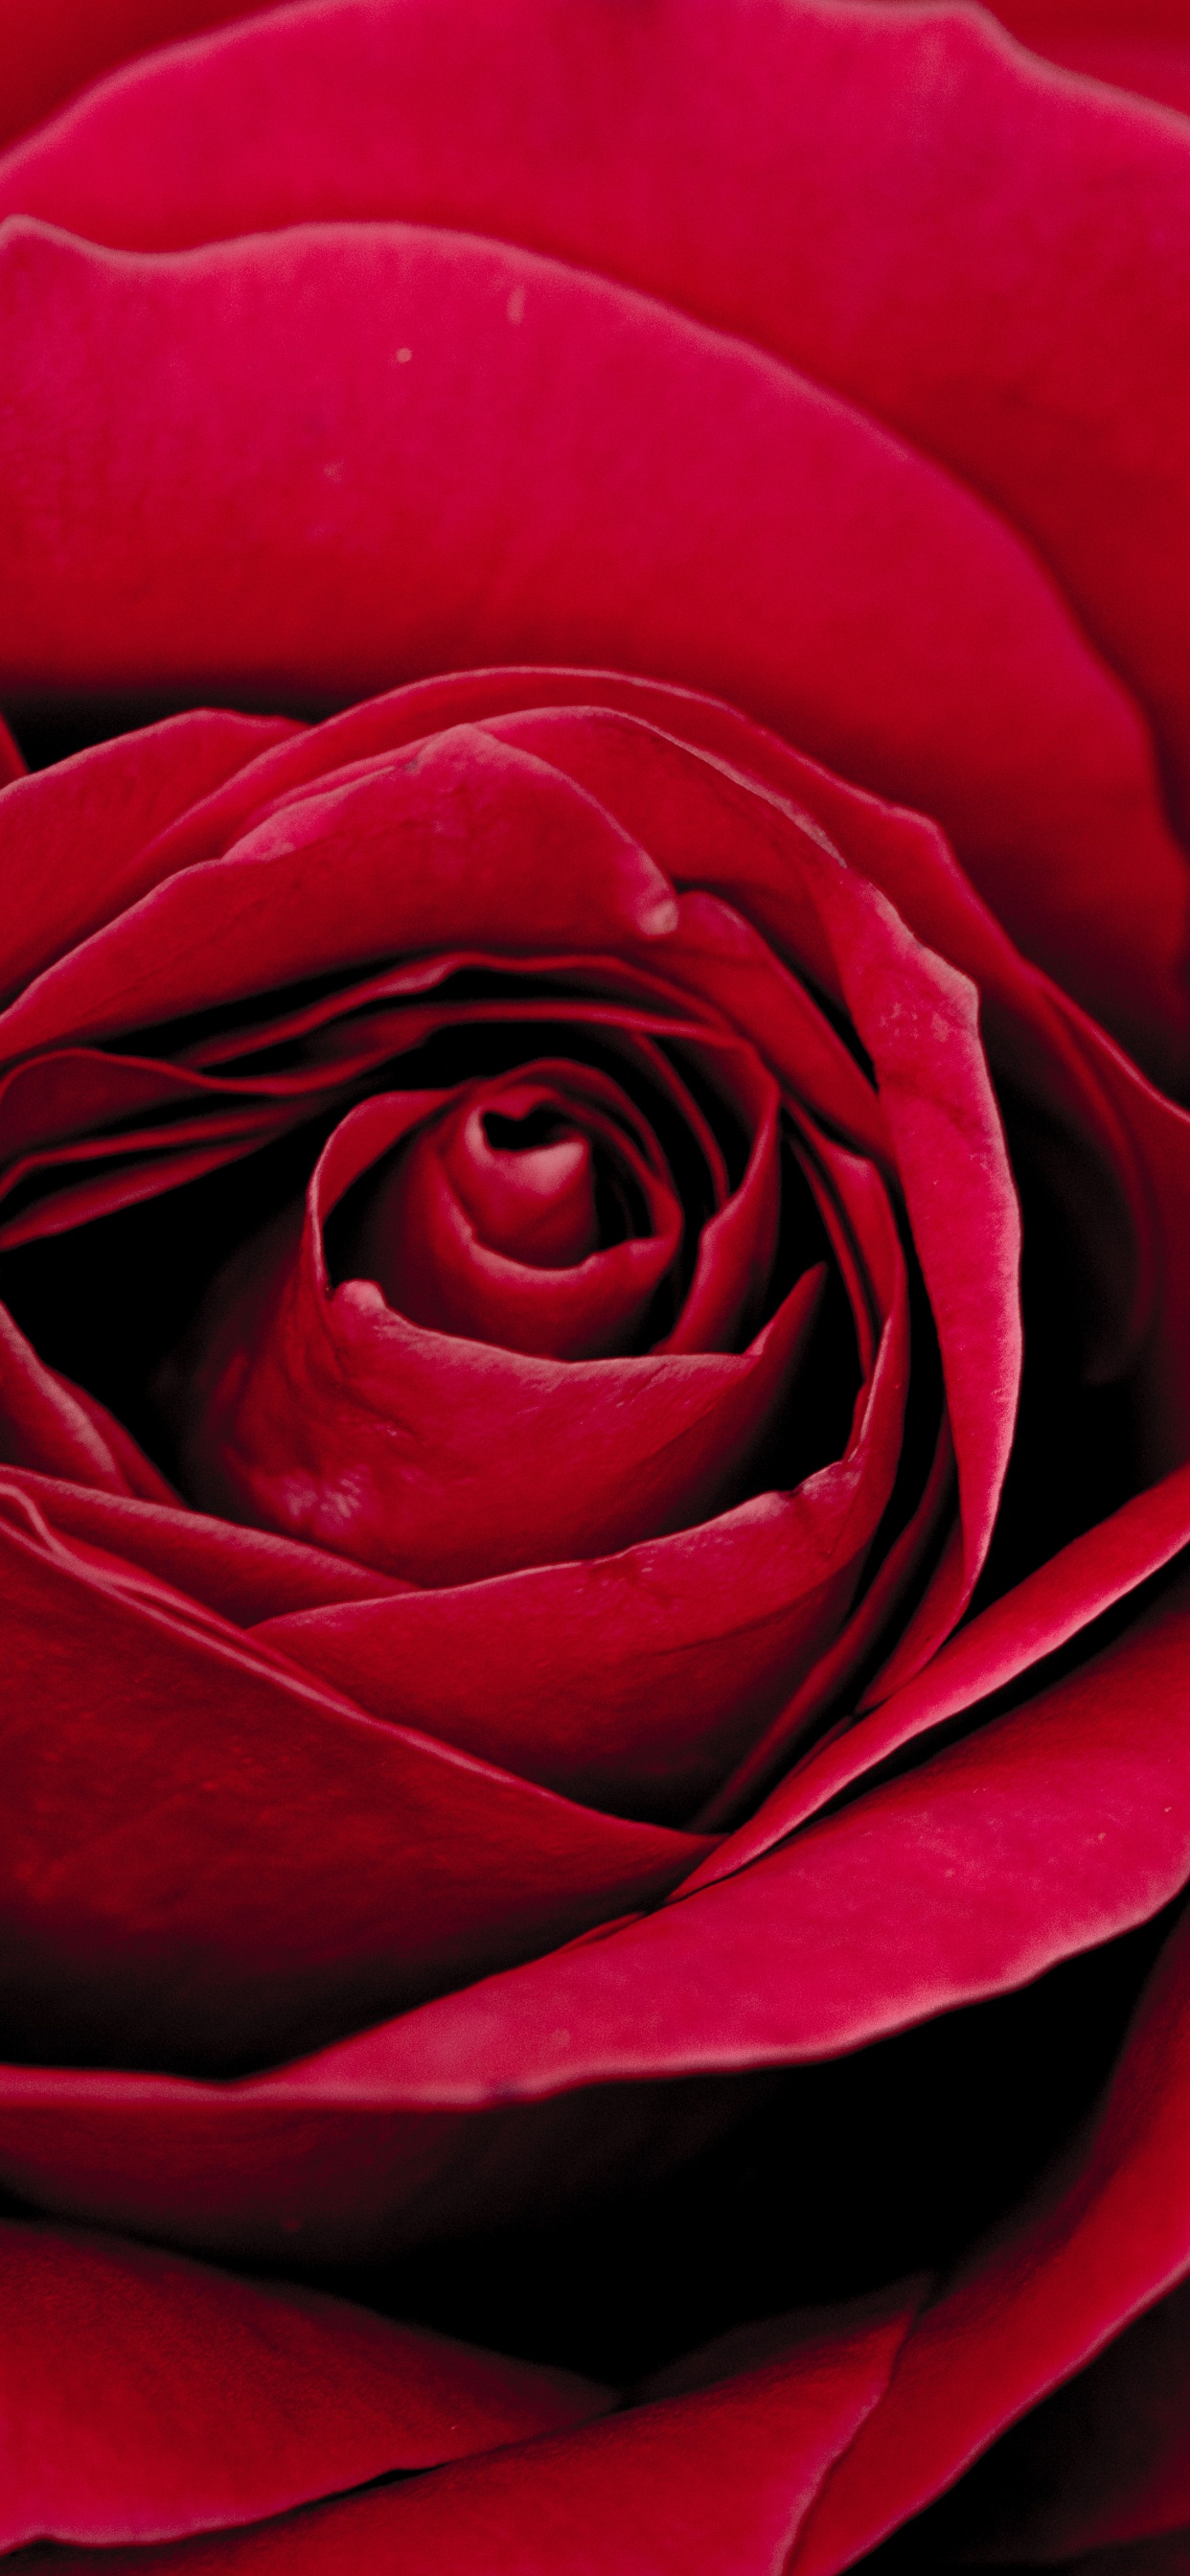 Rose Rouge en Fleur Photo en Gros Plan. Wallpaper in 1242x2688 Resolution